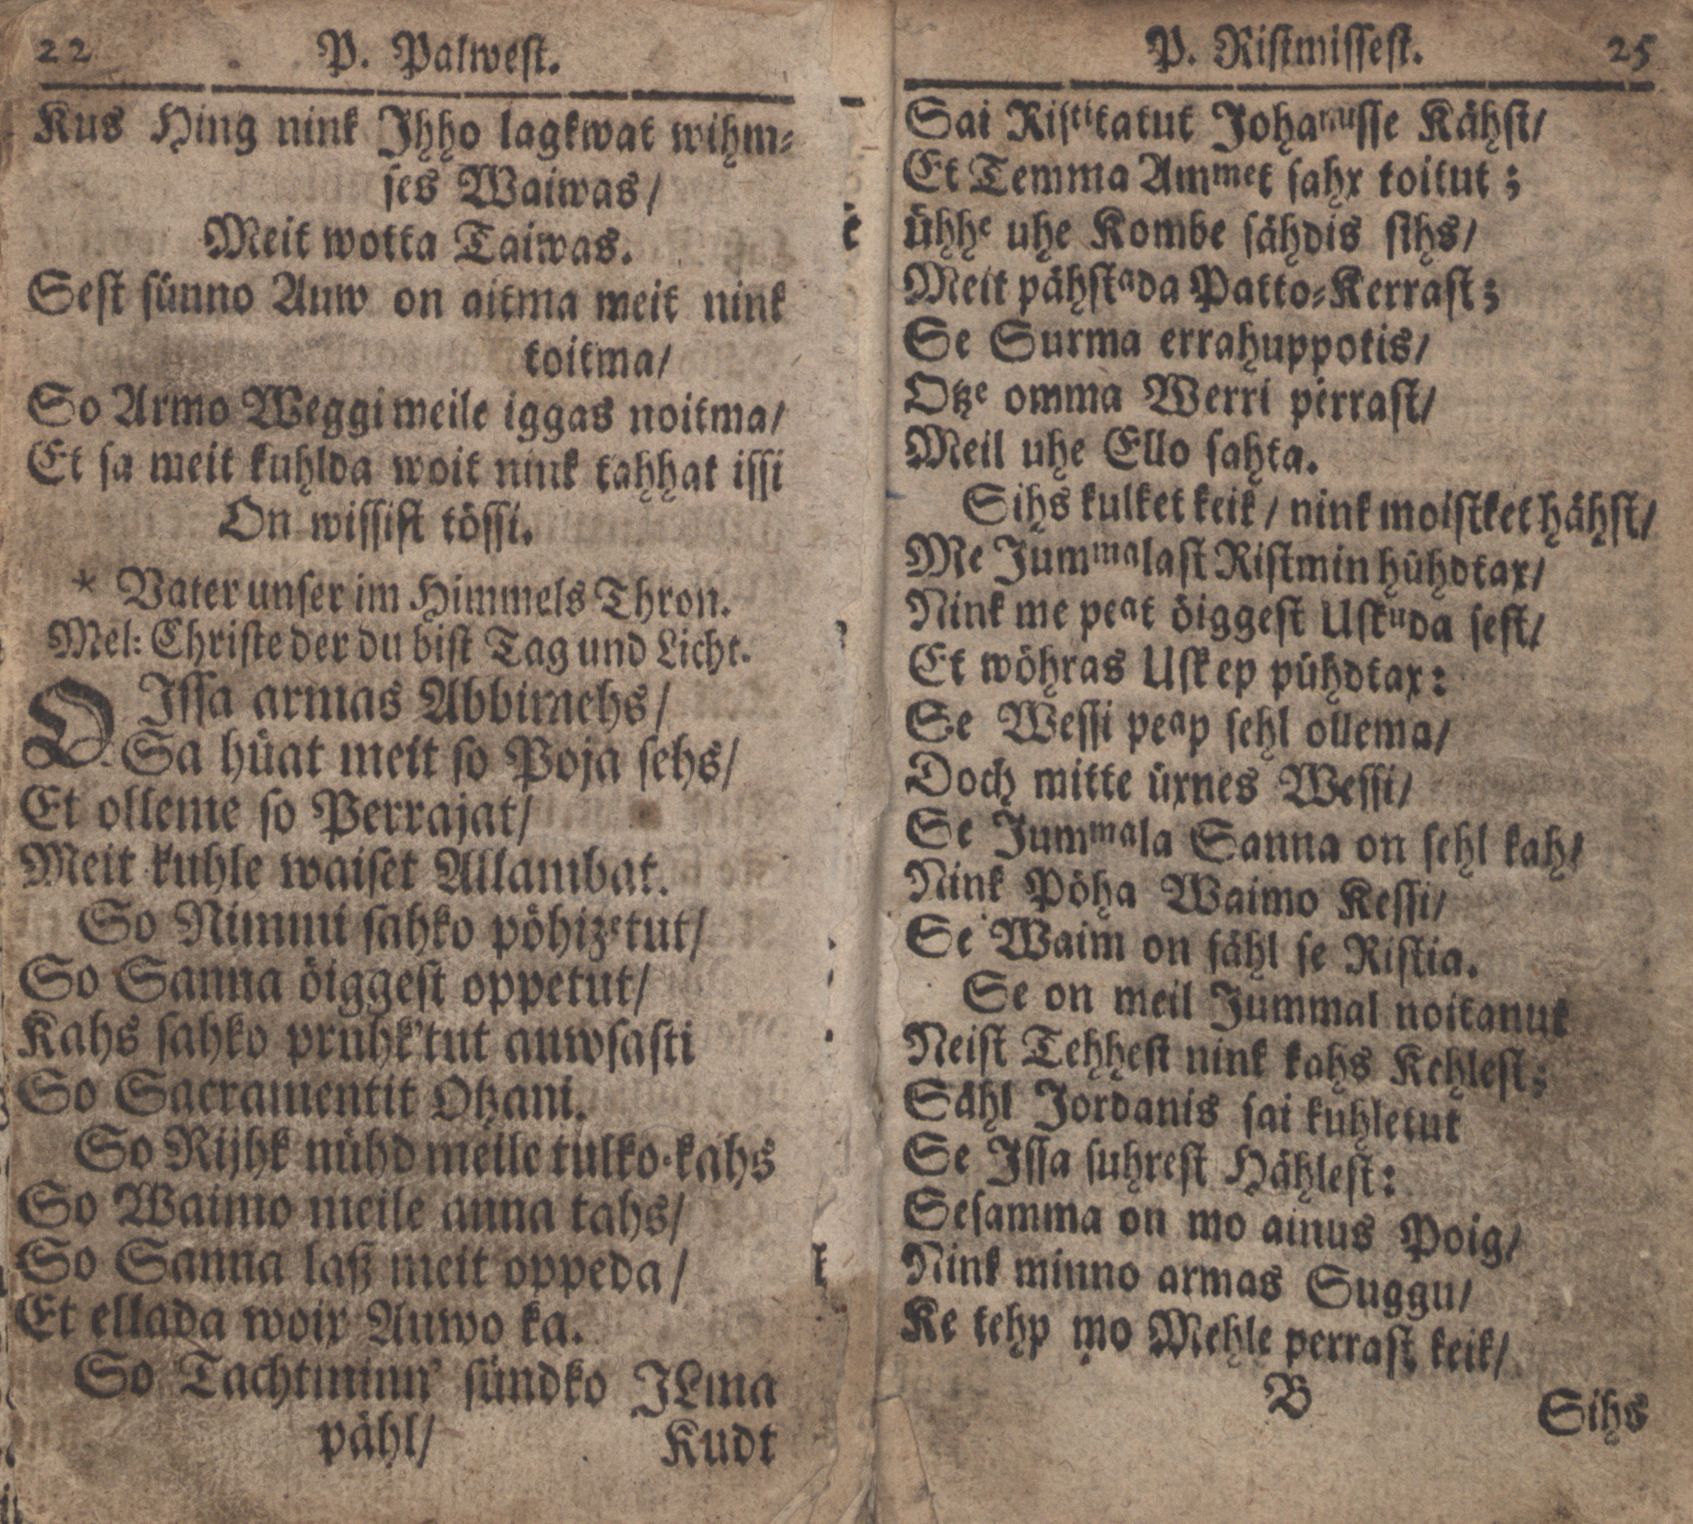 Ma Kele Koddo- nink Kirko-Ramat (1700) | 222. (22-25) Main body of text